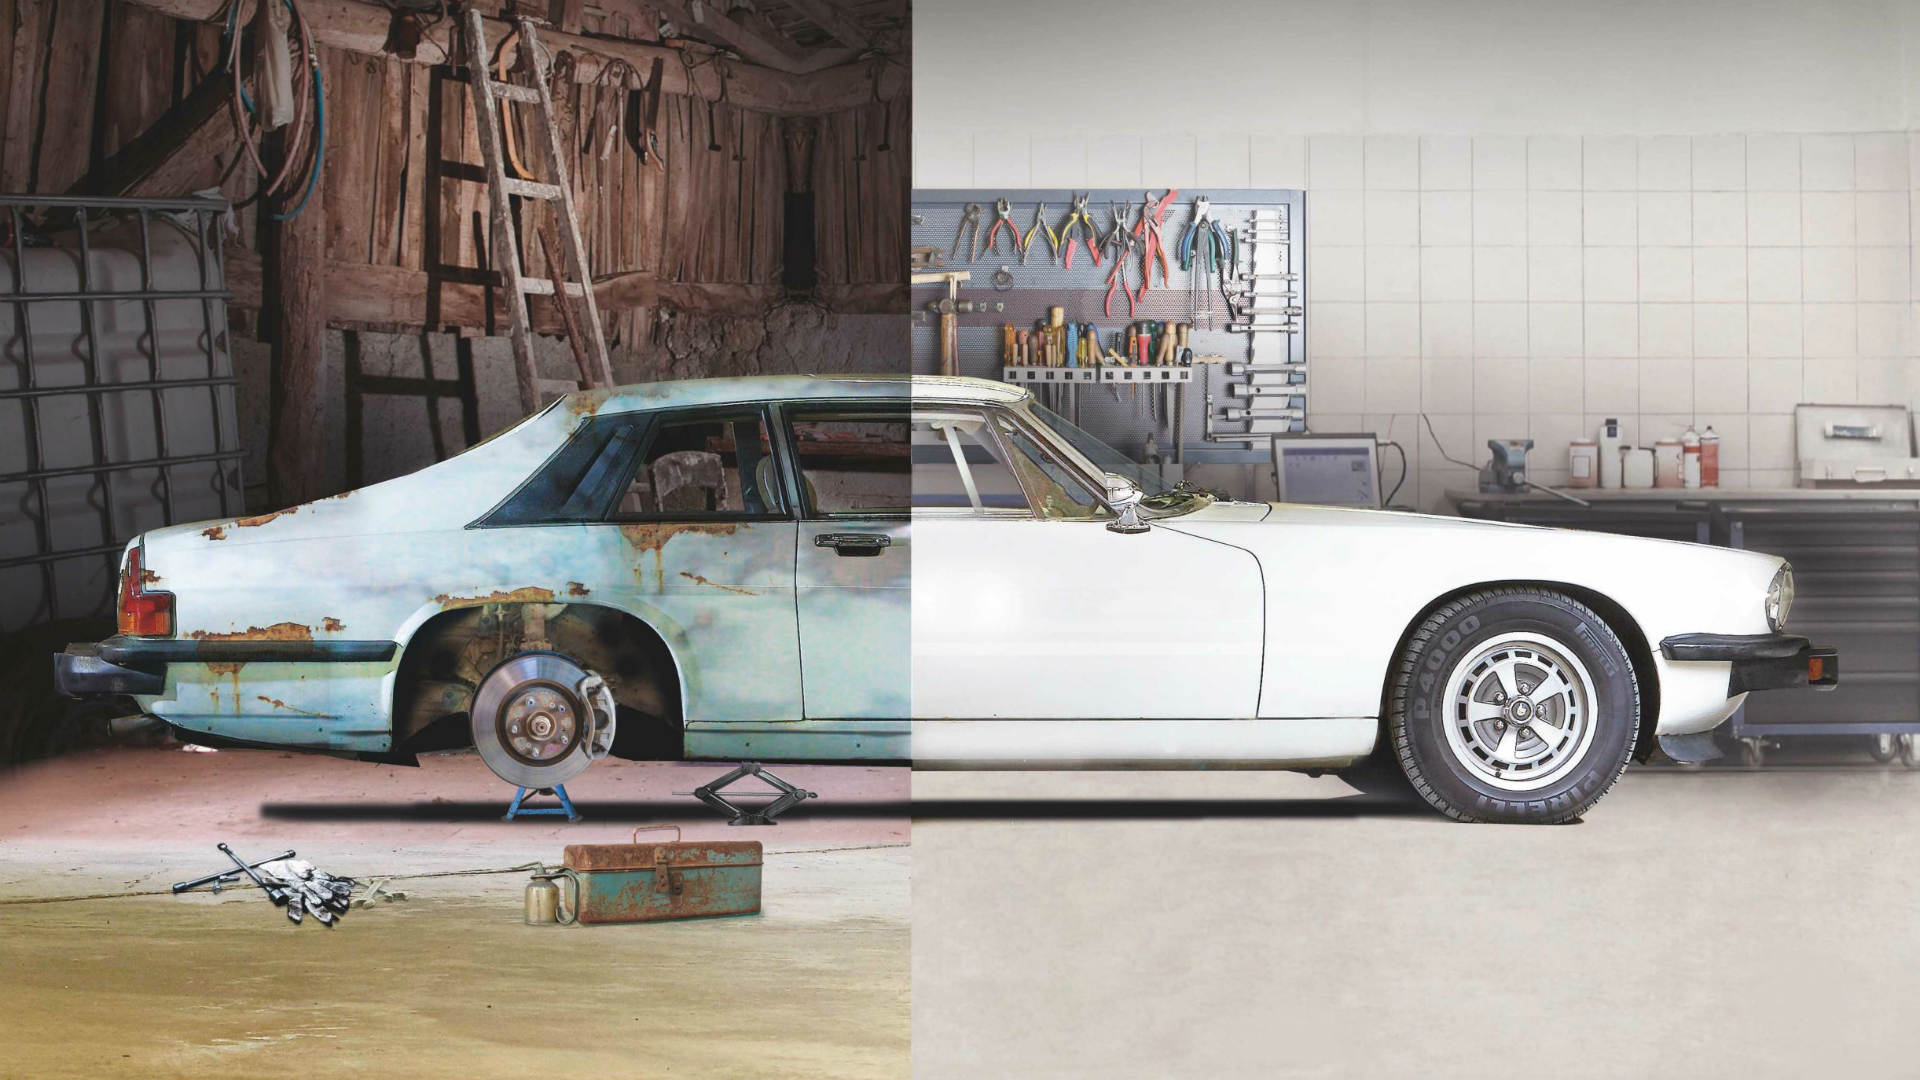 Practical Classics Classic Car and Restoration Show